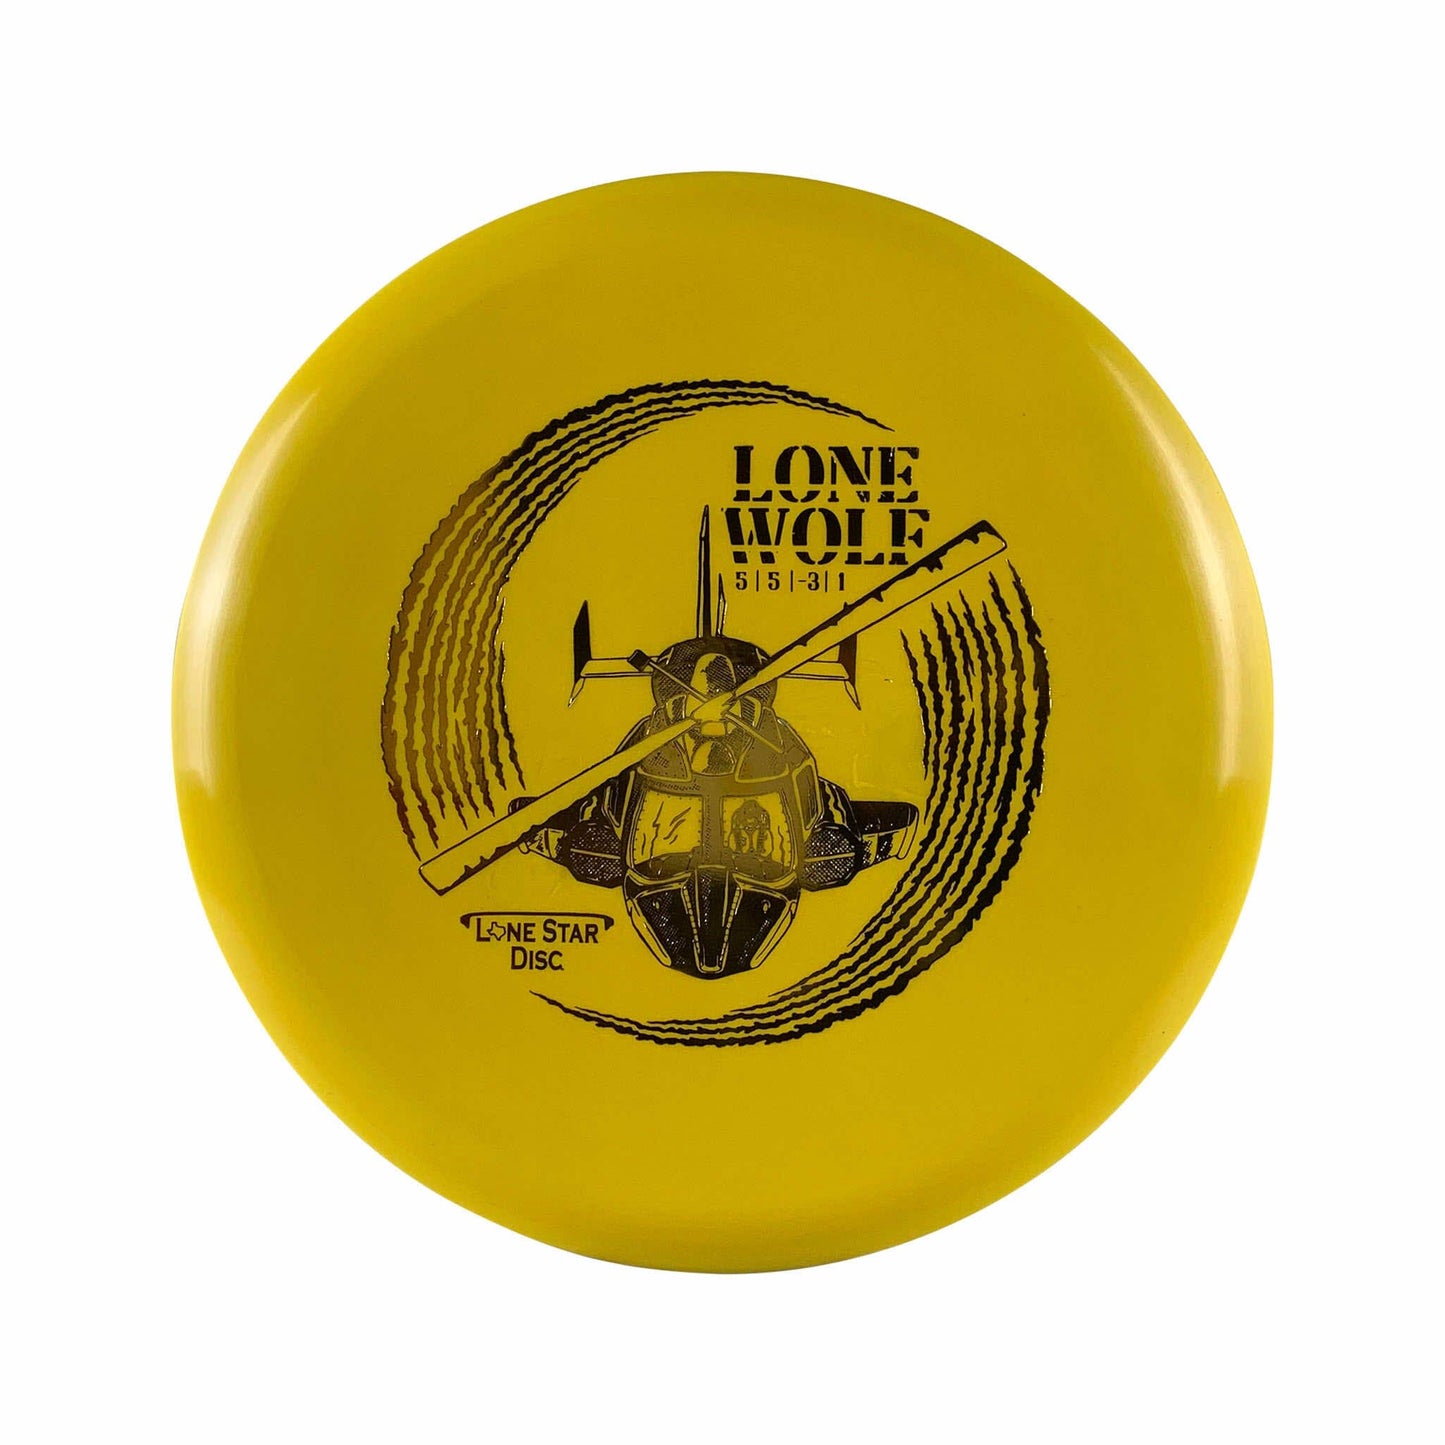 Alpha Lone Wolf Disc Lonestar Disc yellow 175 